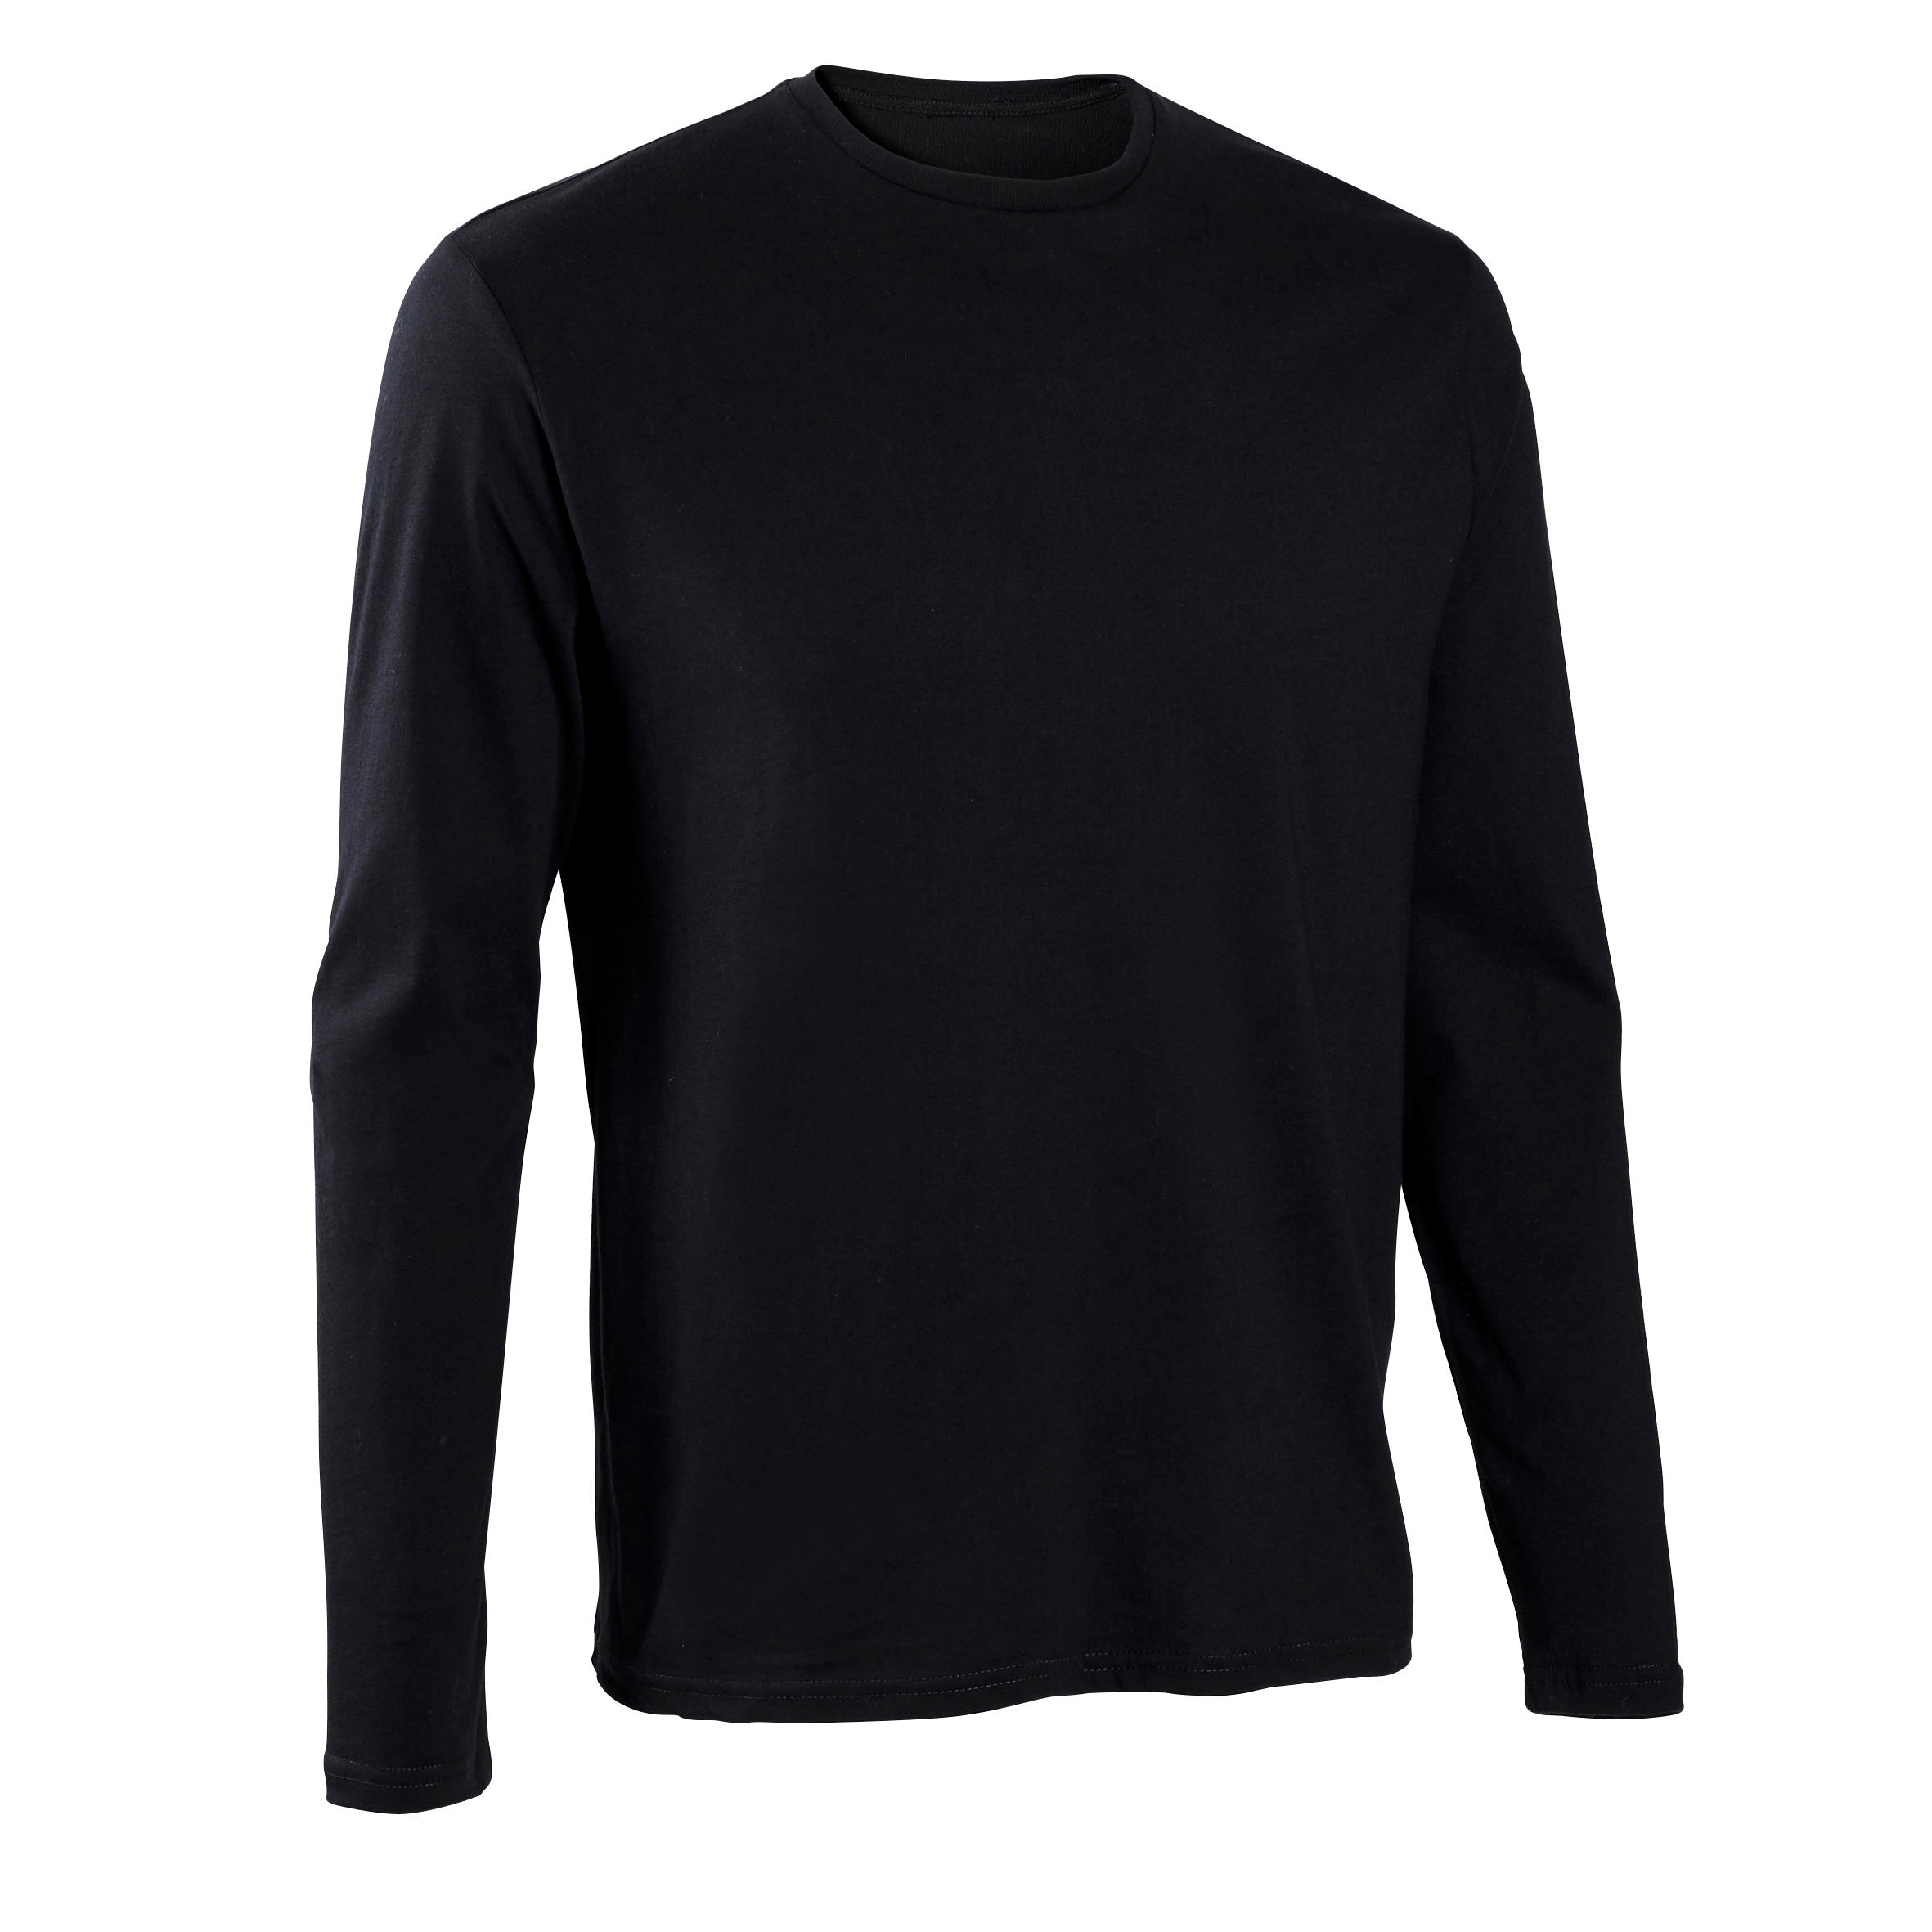 Men's Long-Sleeved Straight-Cut Crew Neck Cotton Fitness T-Shirt 100 - Black 6/6